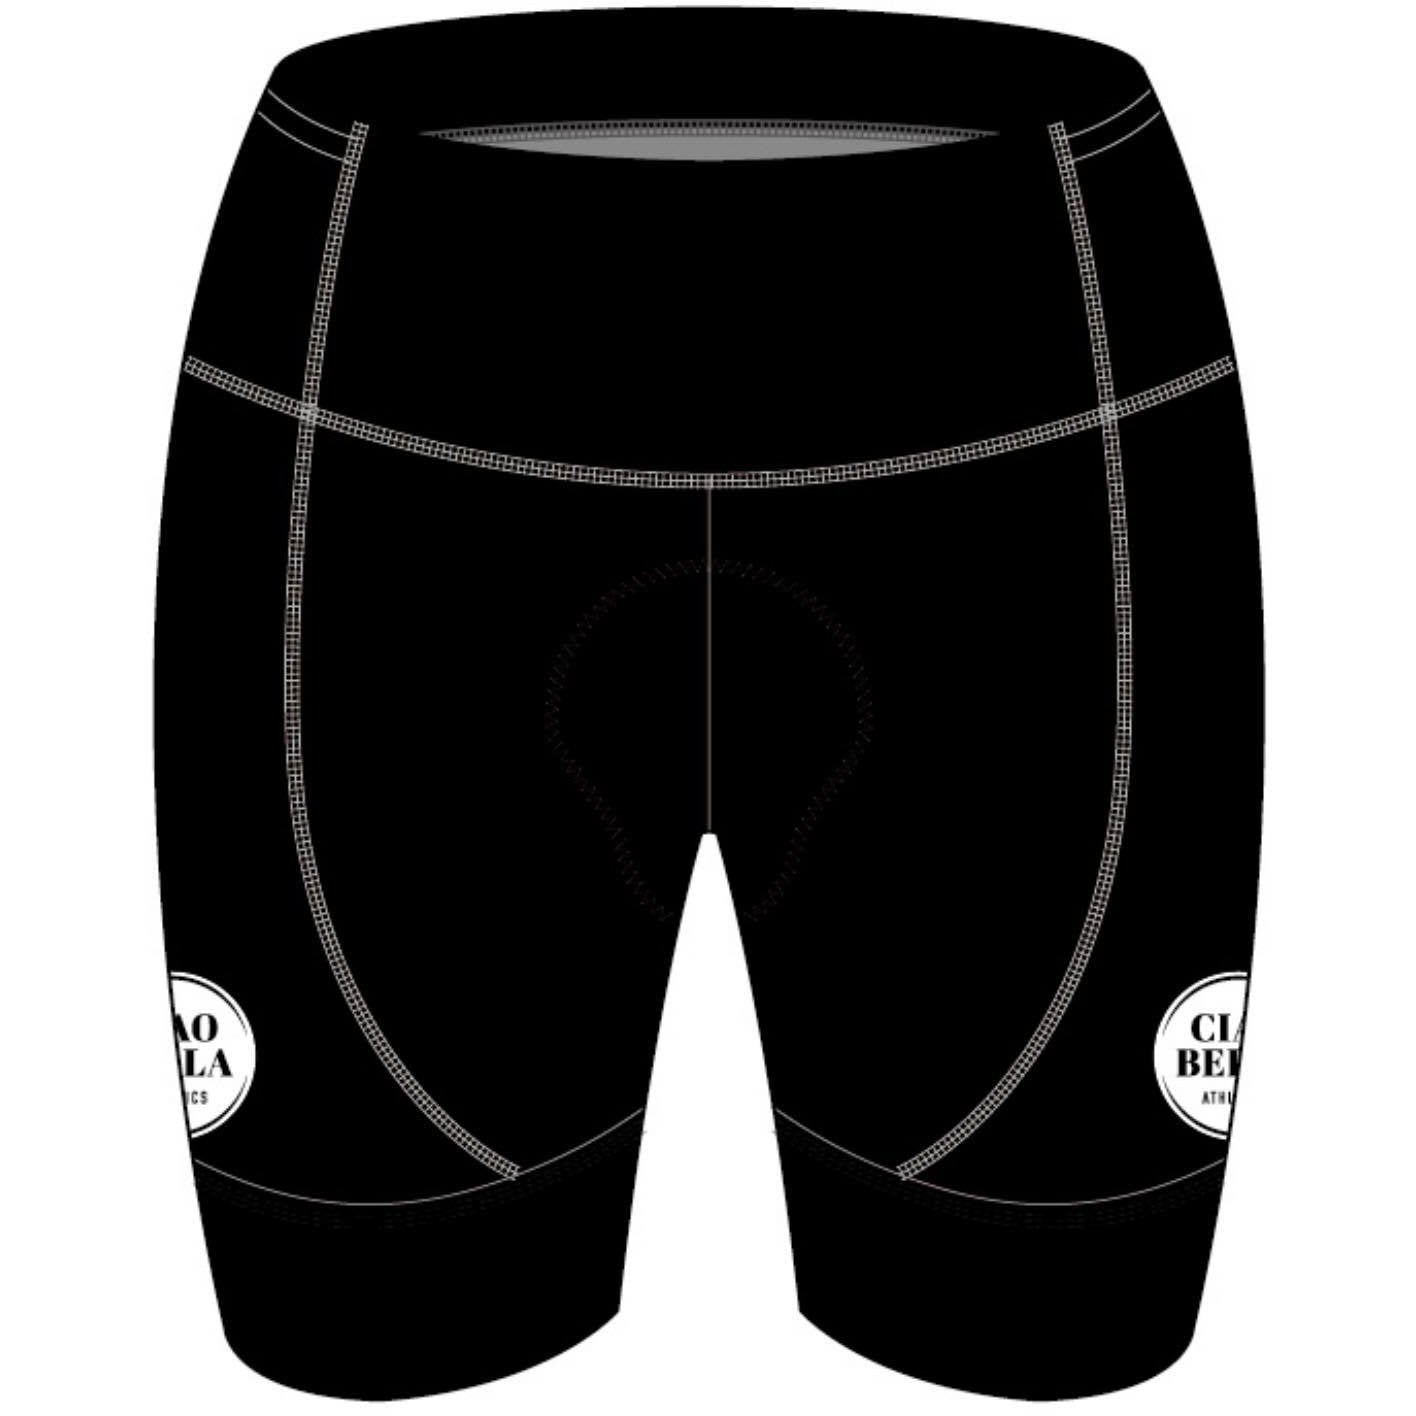 Triathlon Shorts - Black Pearl Design